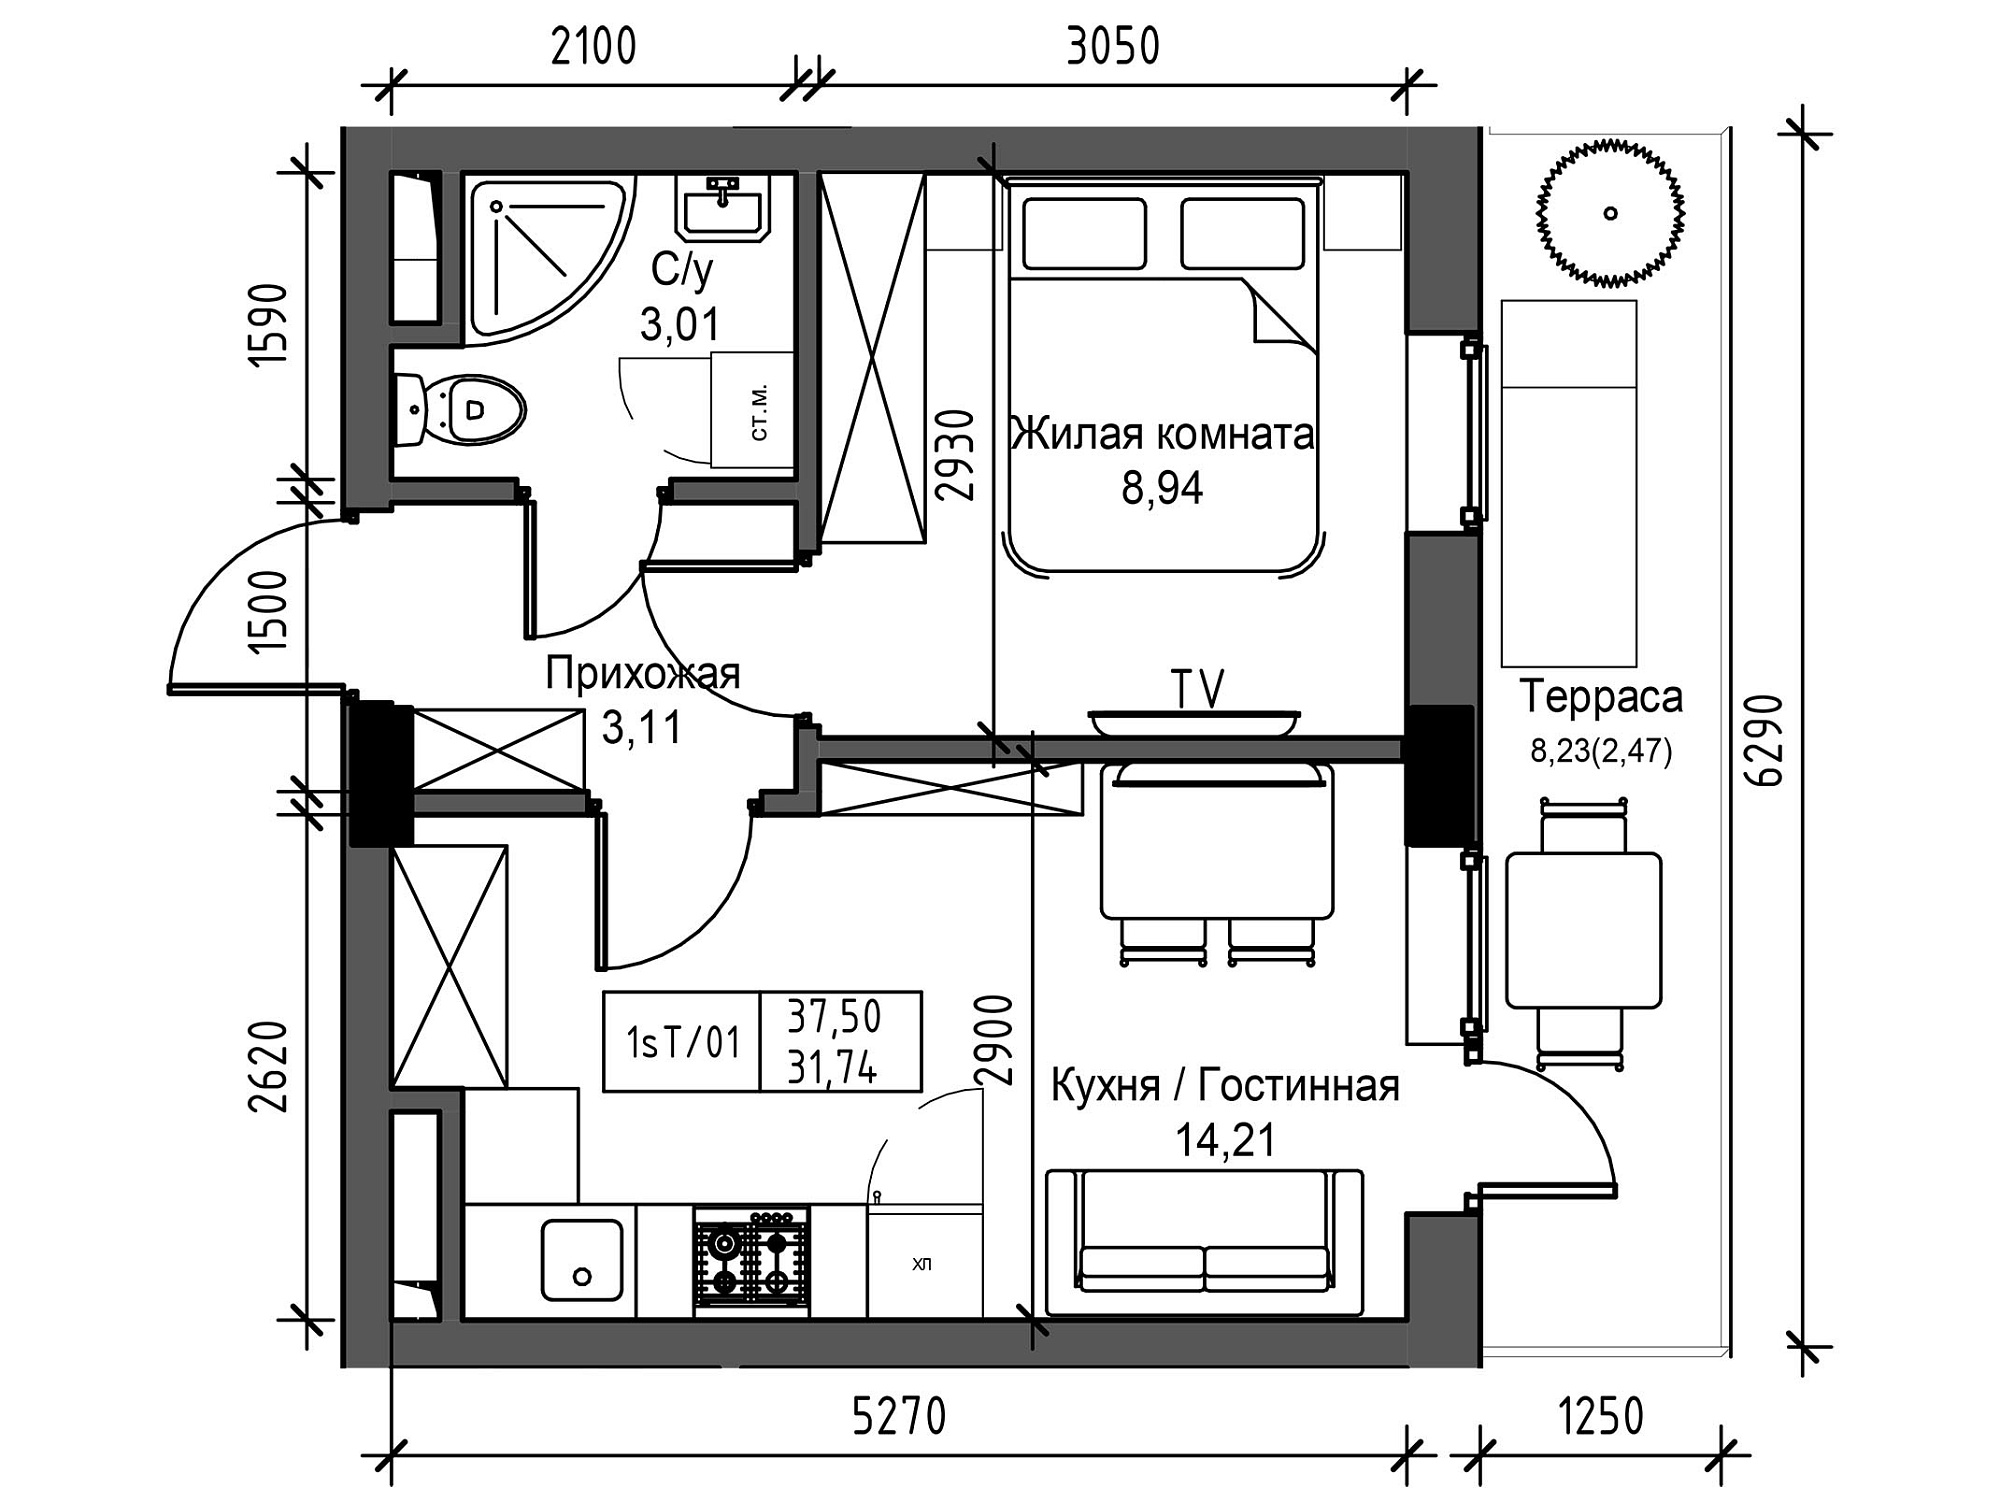 Planning 1-rm flats area 31.74m2, UM-003-04/0022.